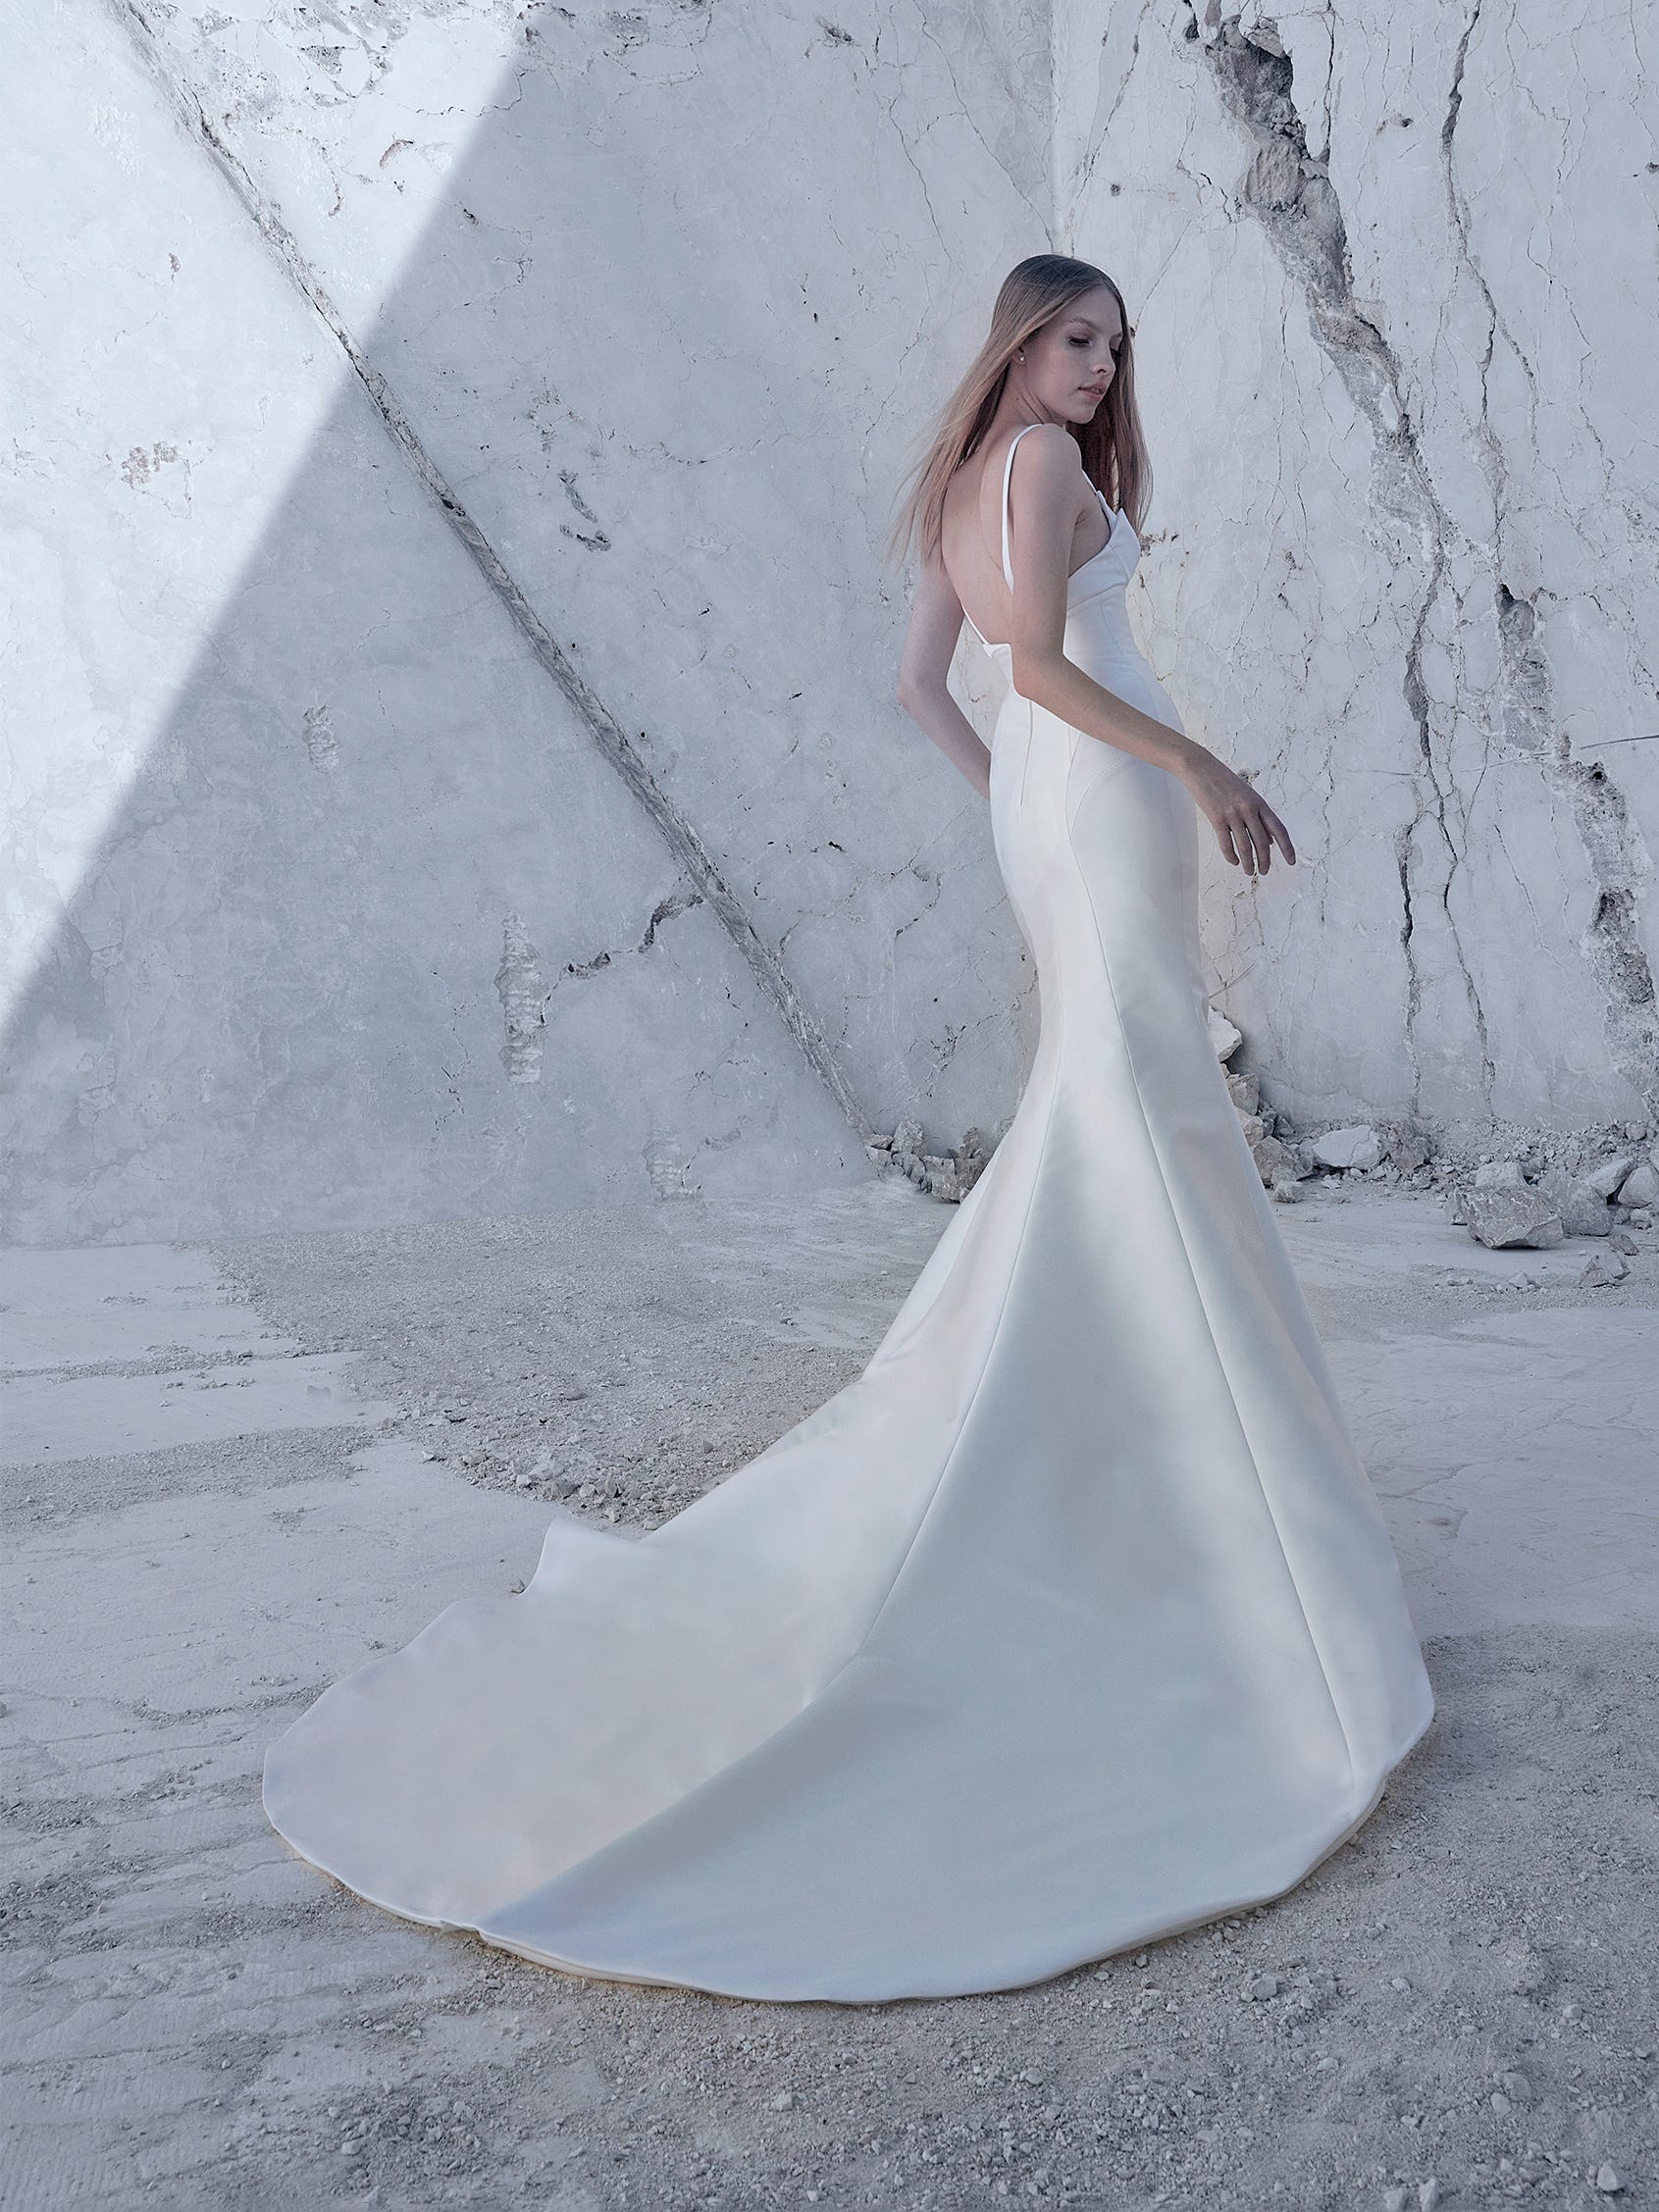 Bridal Style: Wedding Dress Trends for 2020 - Boho Wedding Blog